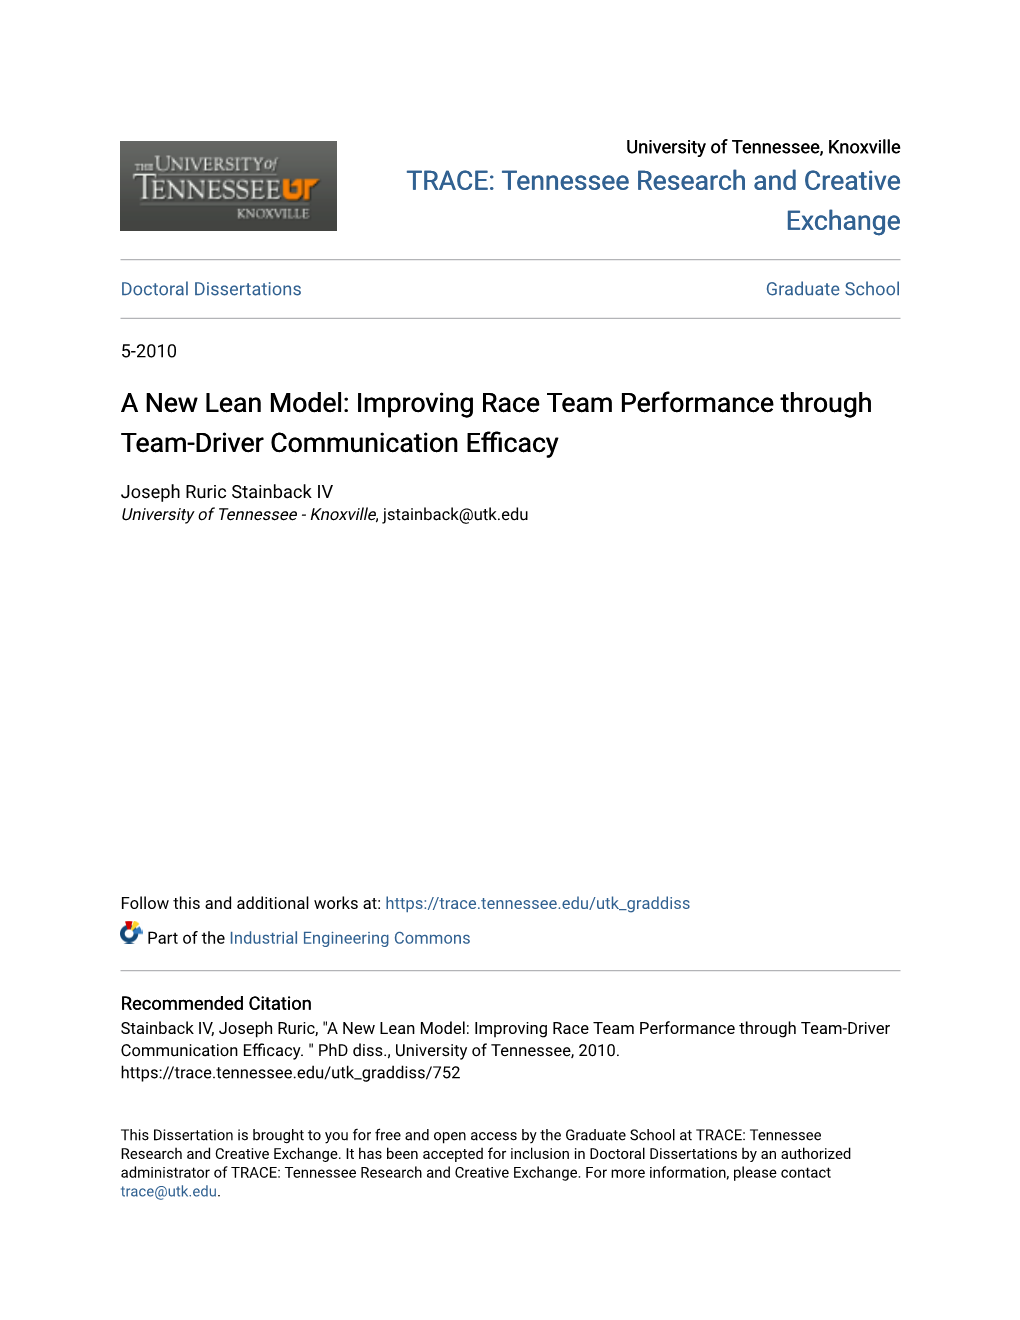 Improving Race Team Performance Through Team-Driver Communication Efficacy